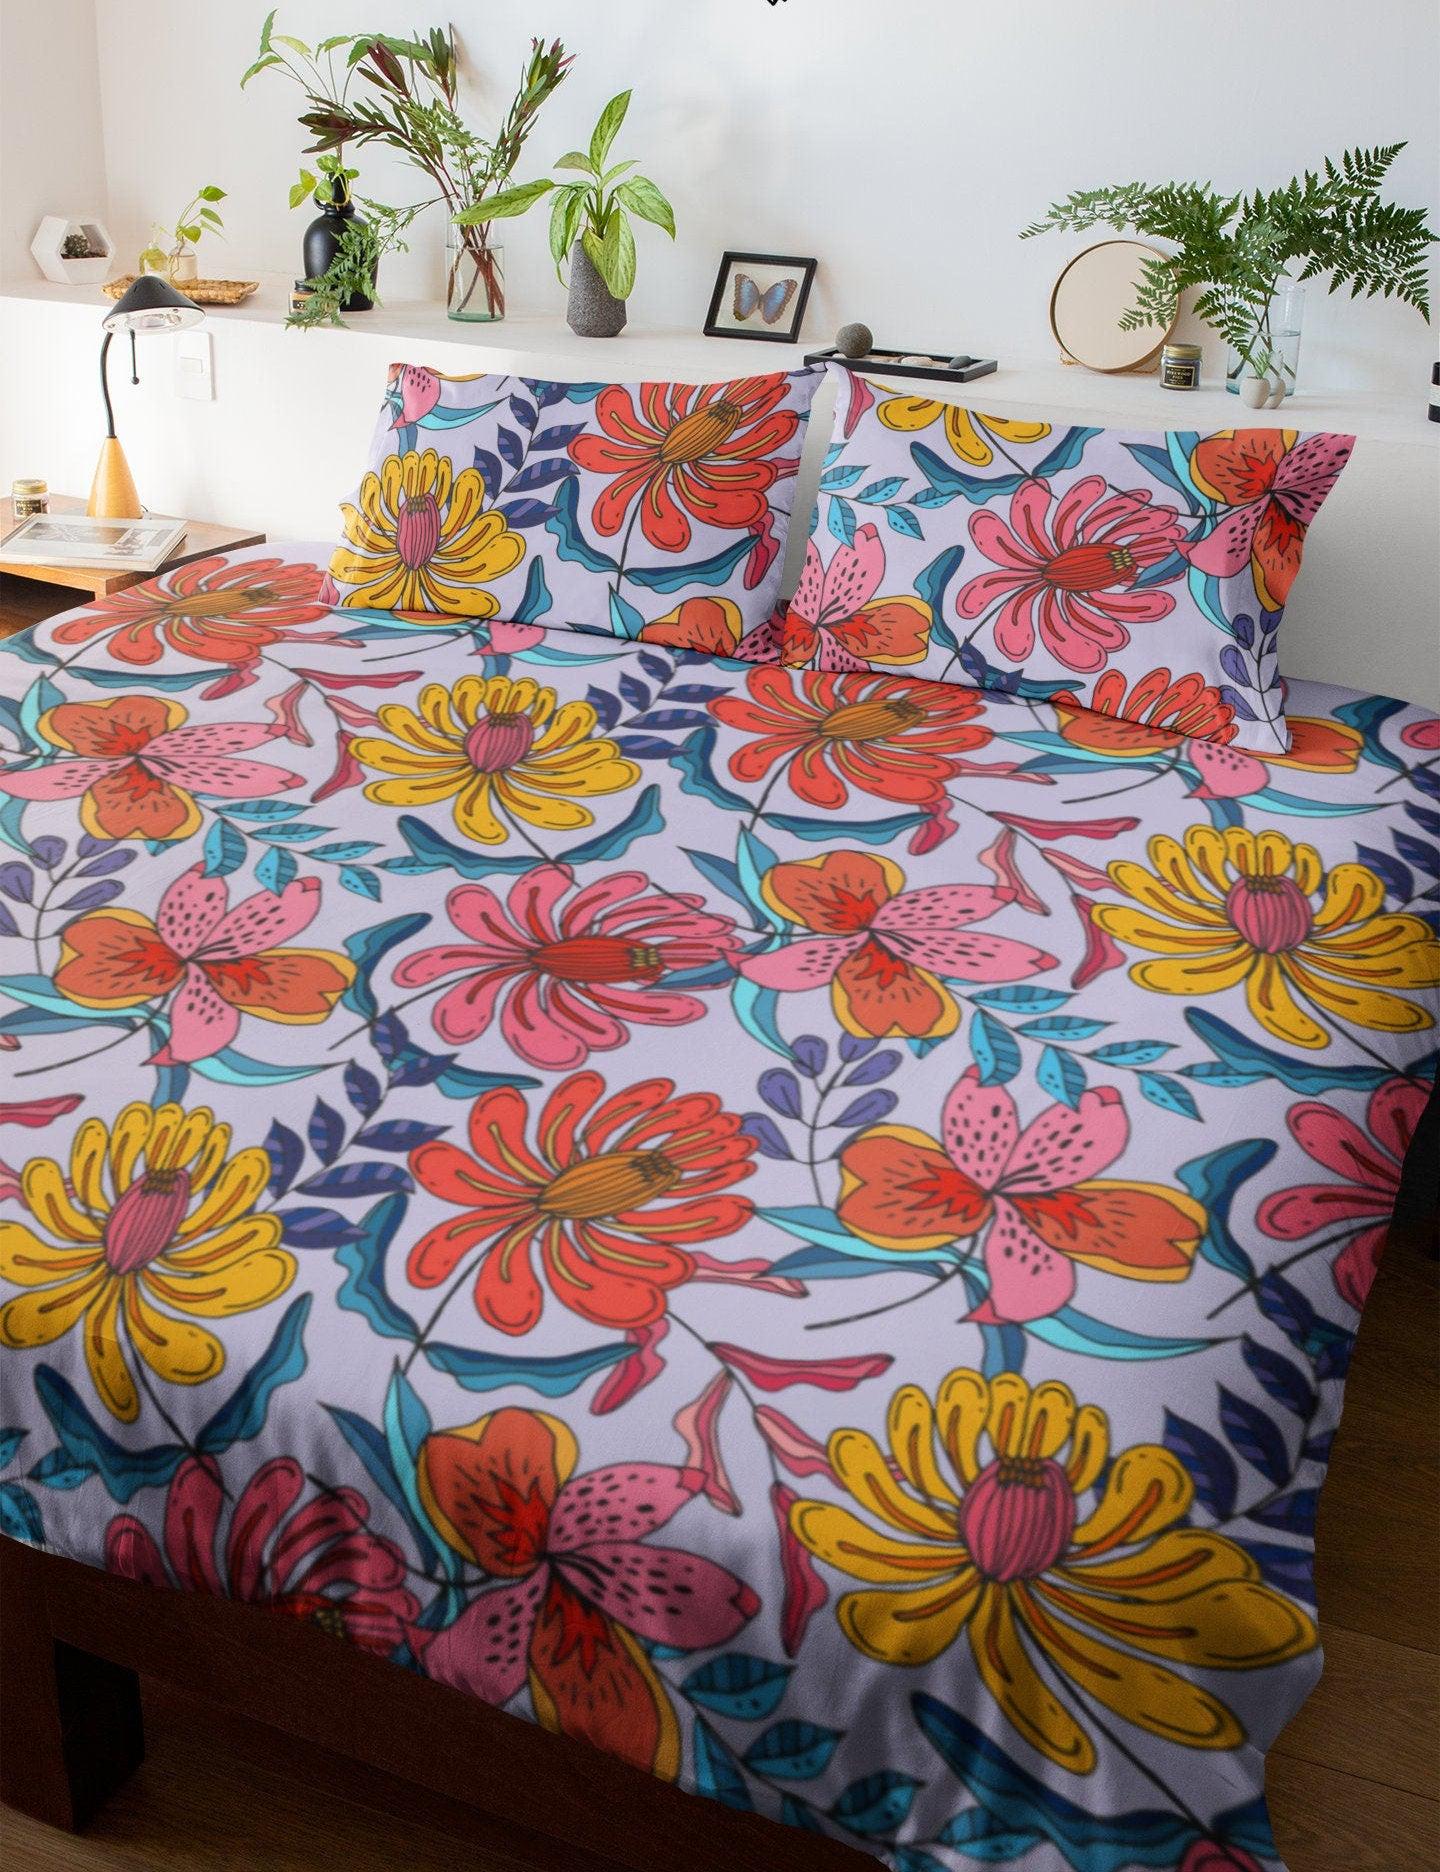 daintyduvet Chrysanthemum Colorful Duvet Cover | Beautiful Bedding Set with Spider Mum Flower Design